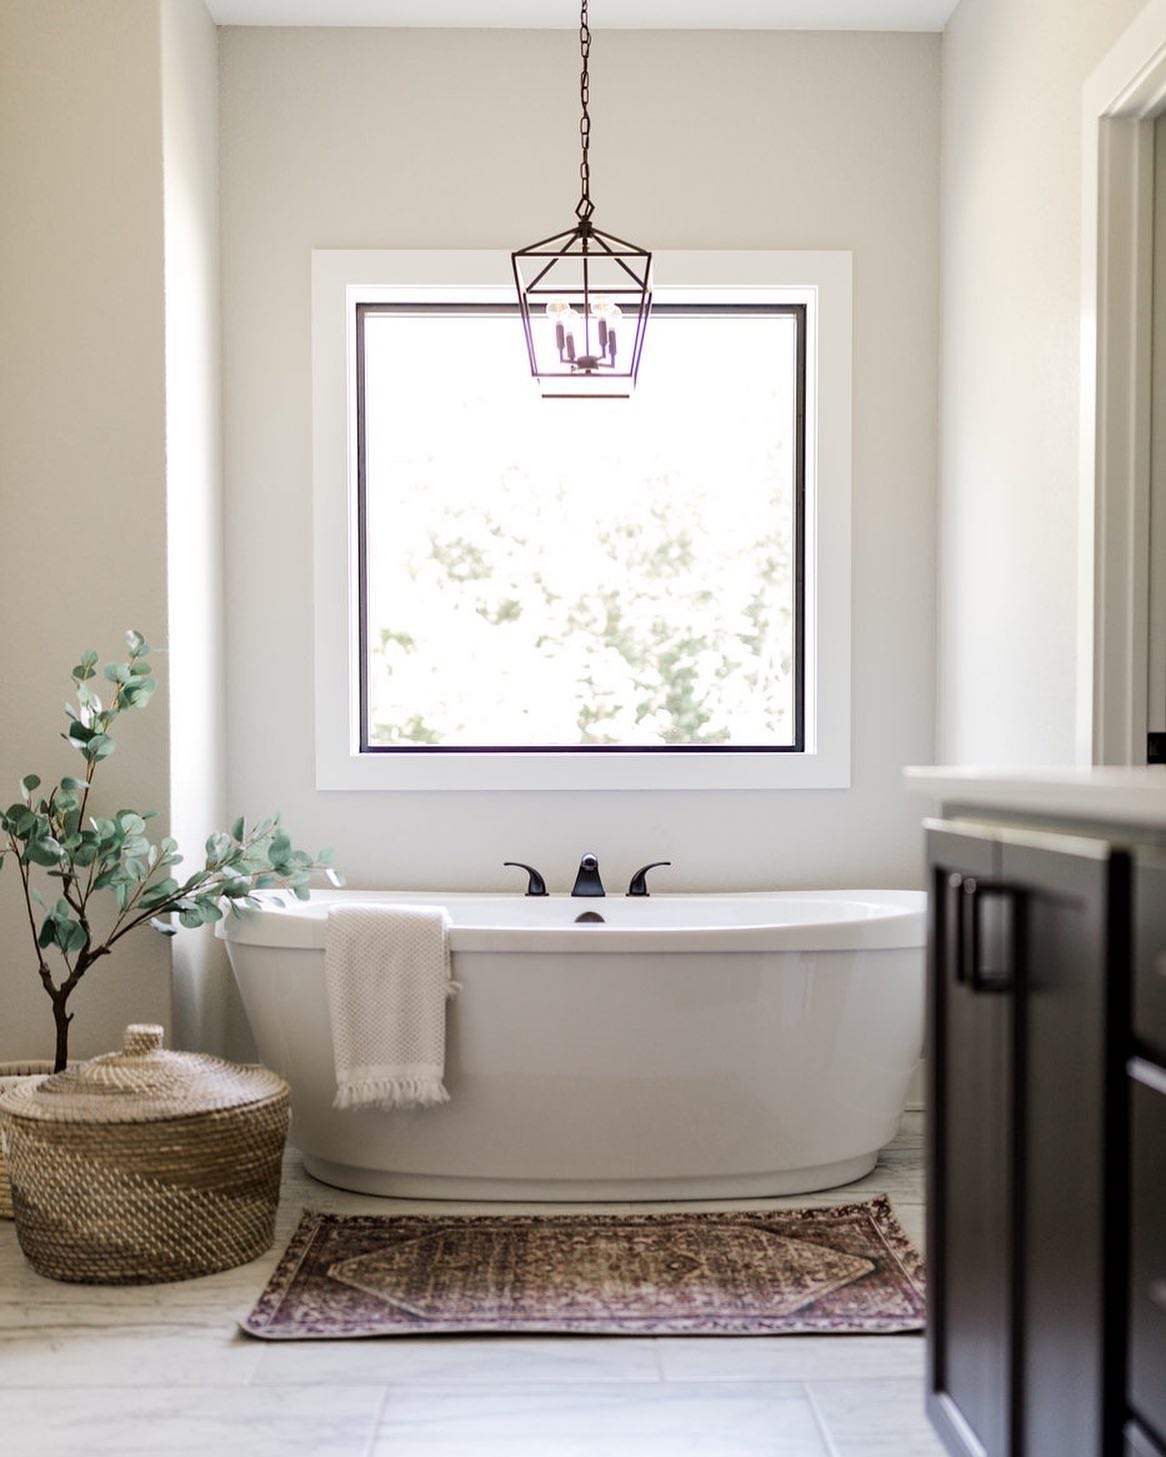 Square picture window over bathtub lets light into spa like bathroom